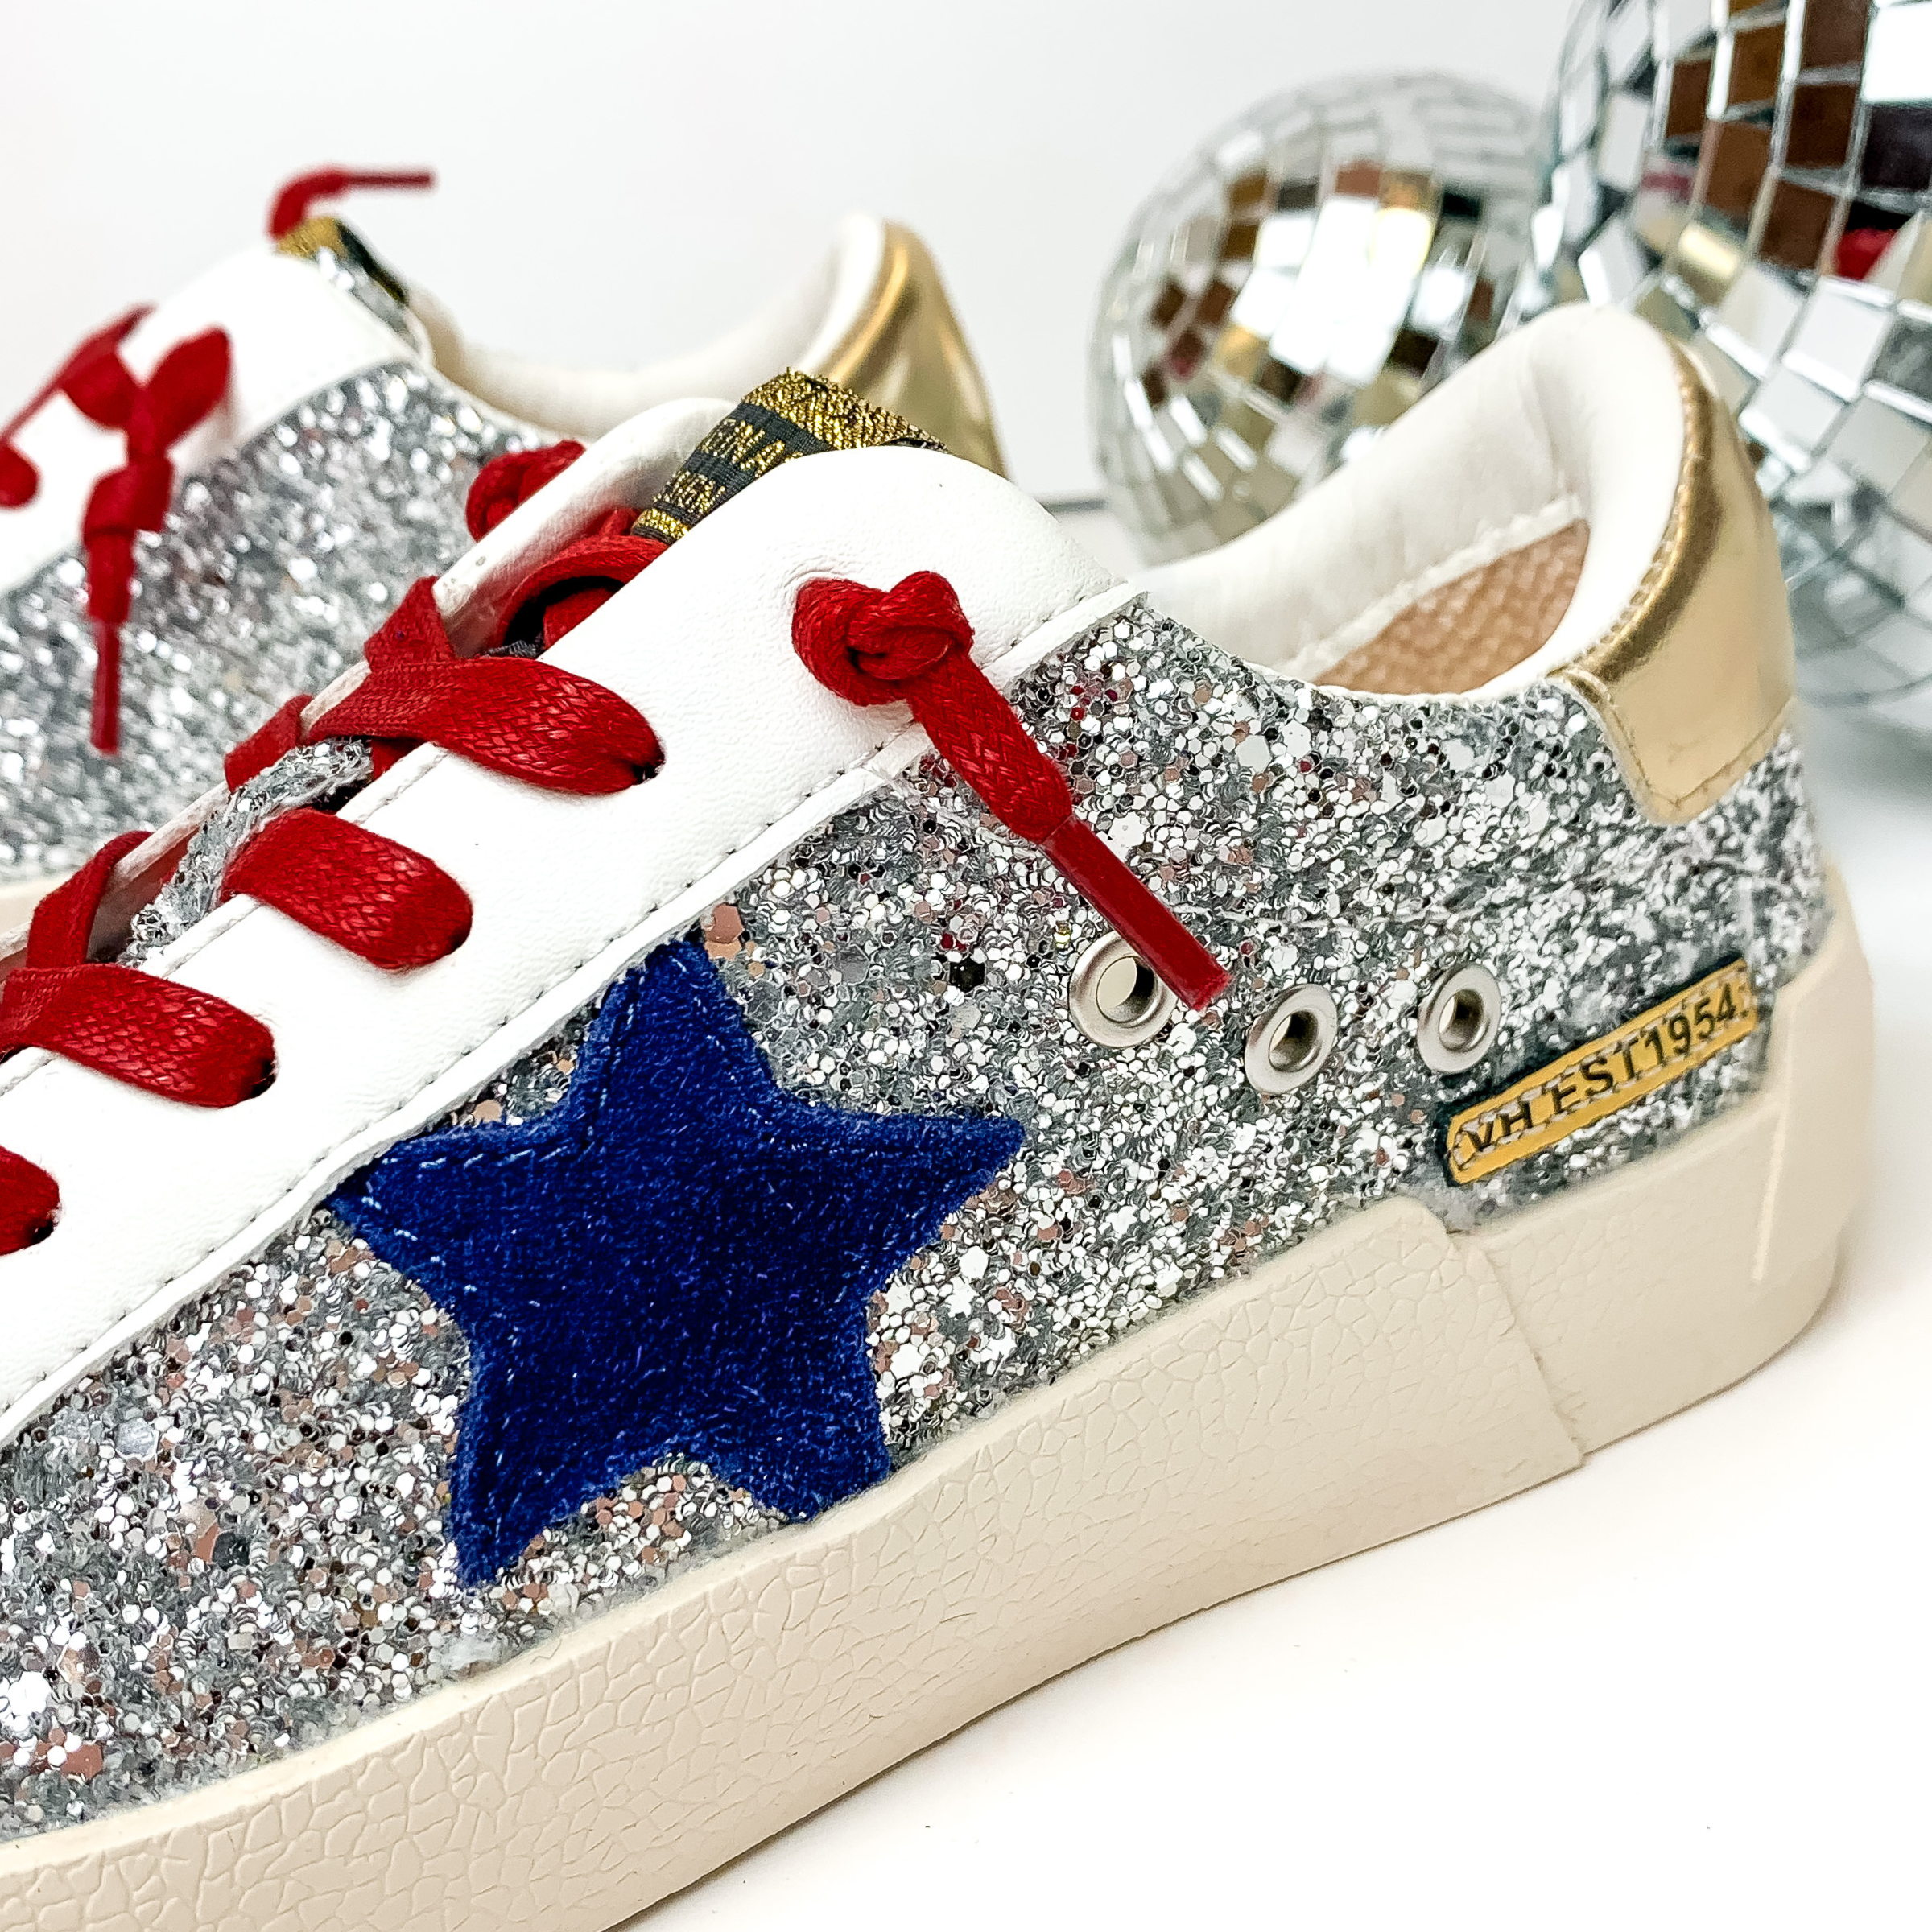 Women's Glitter Star Sneakers Shoes - Silver Multi, Size 8.5 by Venus